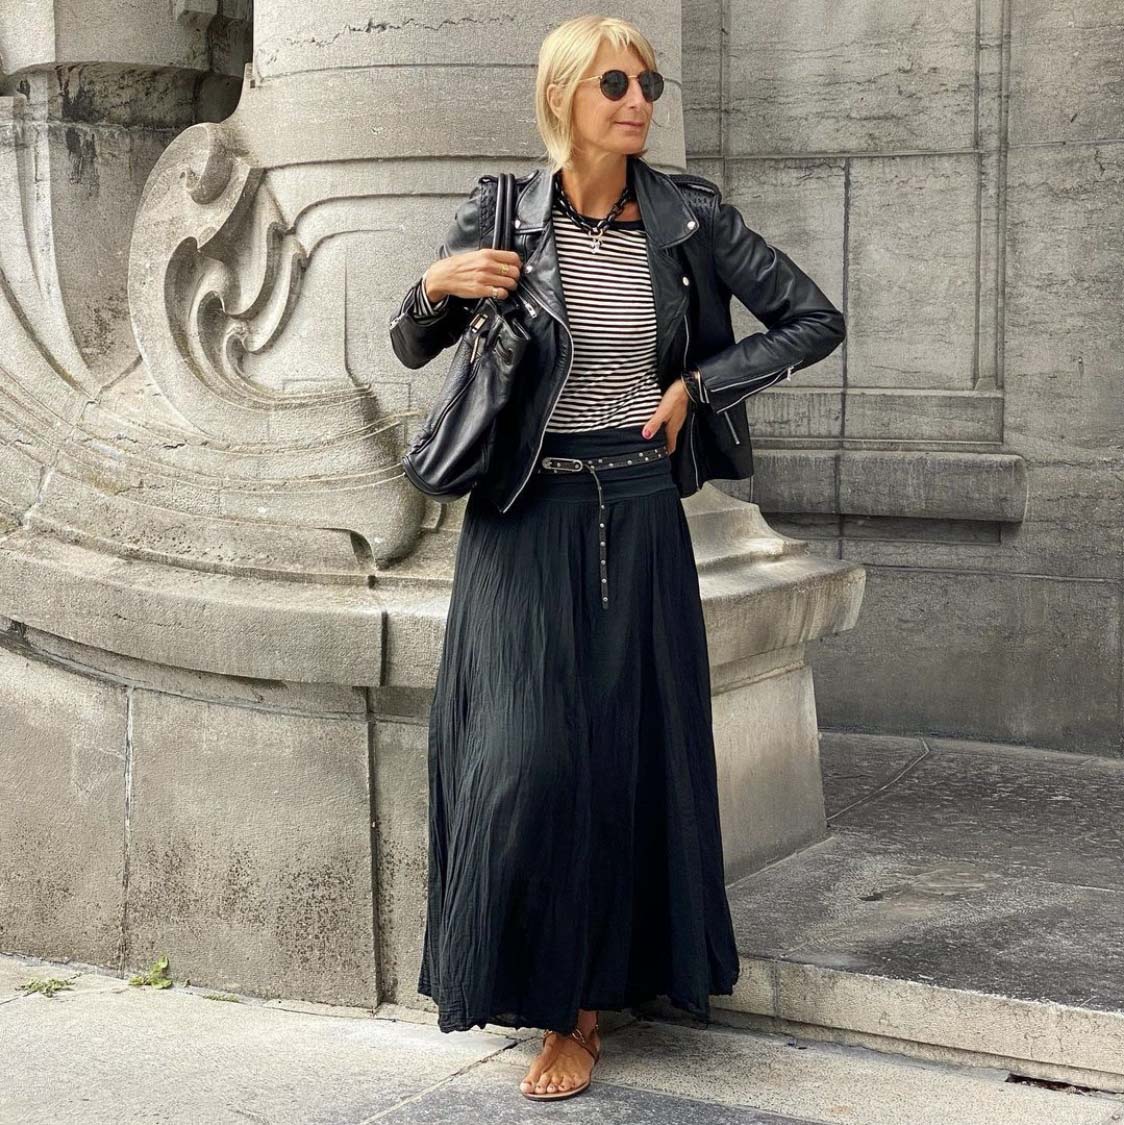 Ankara maxi skirt & faux leather jacket - VERSICOLOR CLOSET